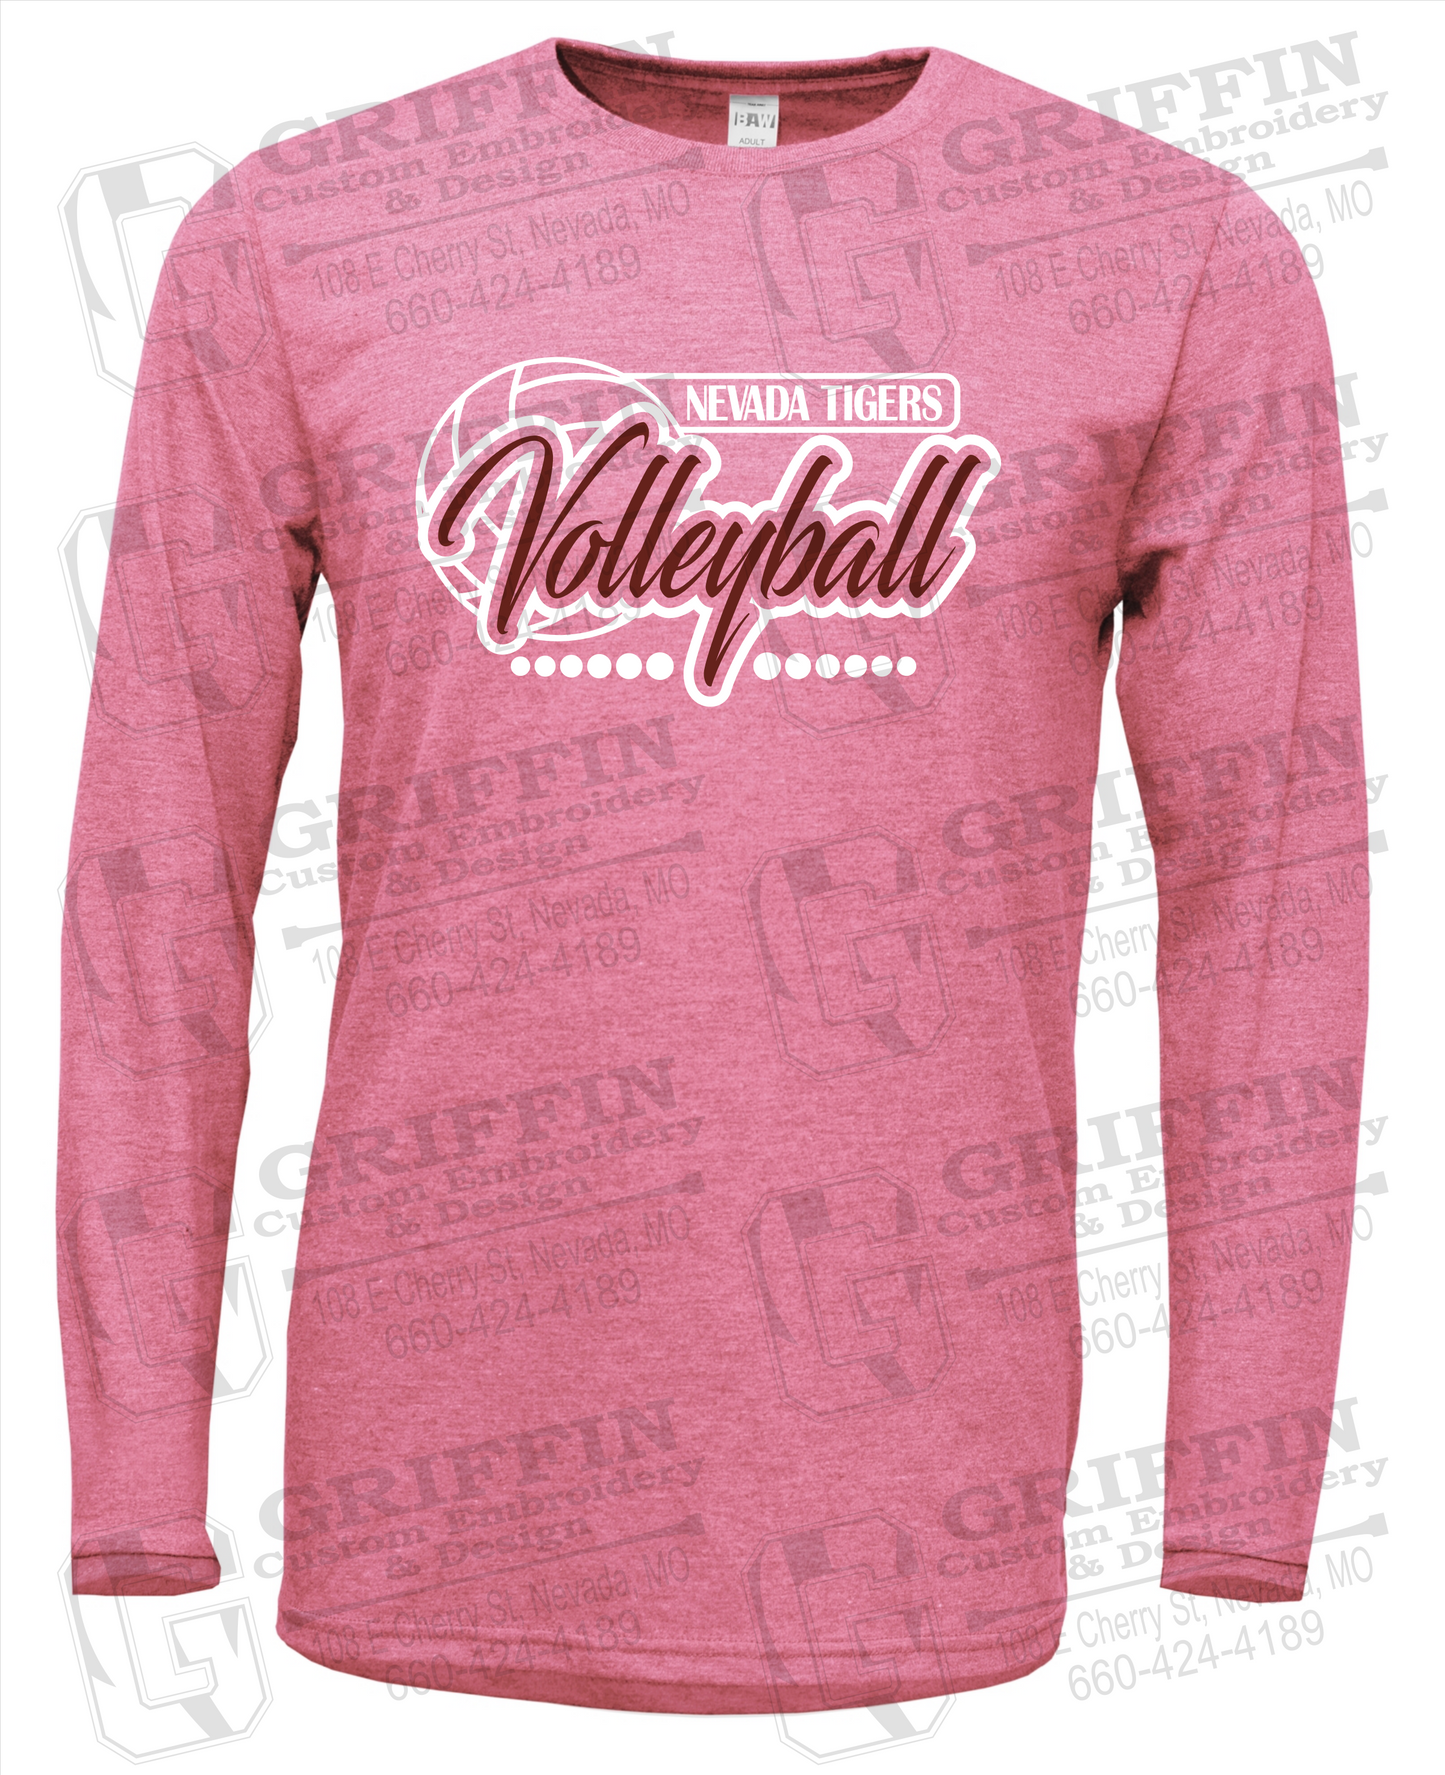 Soft-Tek Long Sleeve T-Shirt - Volleyball - Nevada Tigers 23-Q